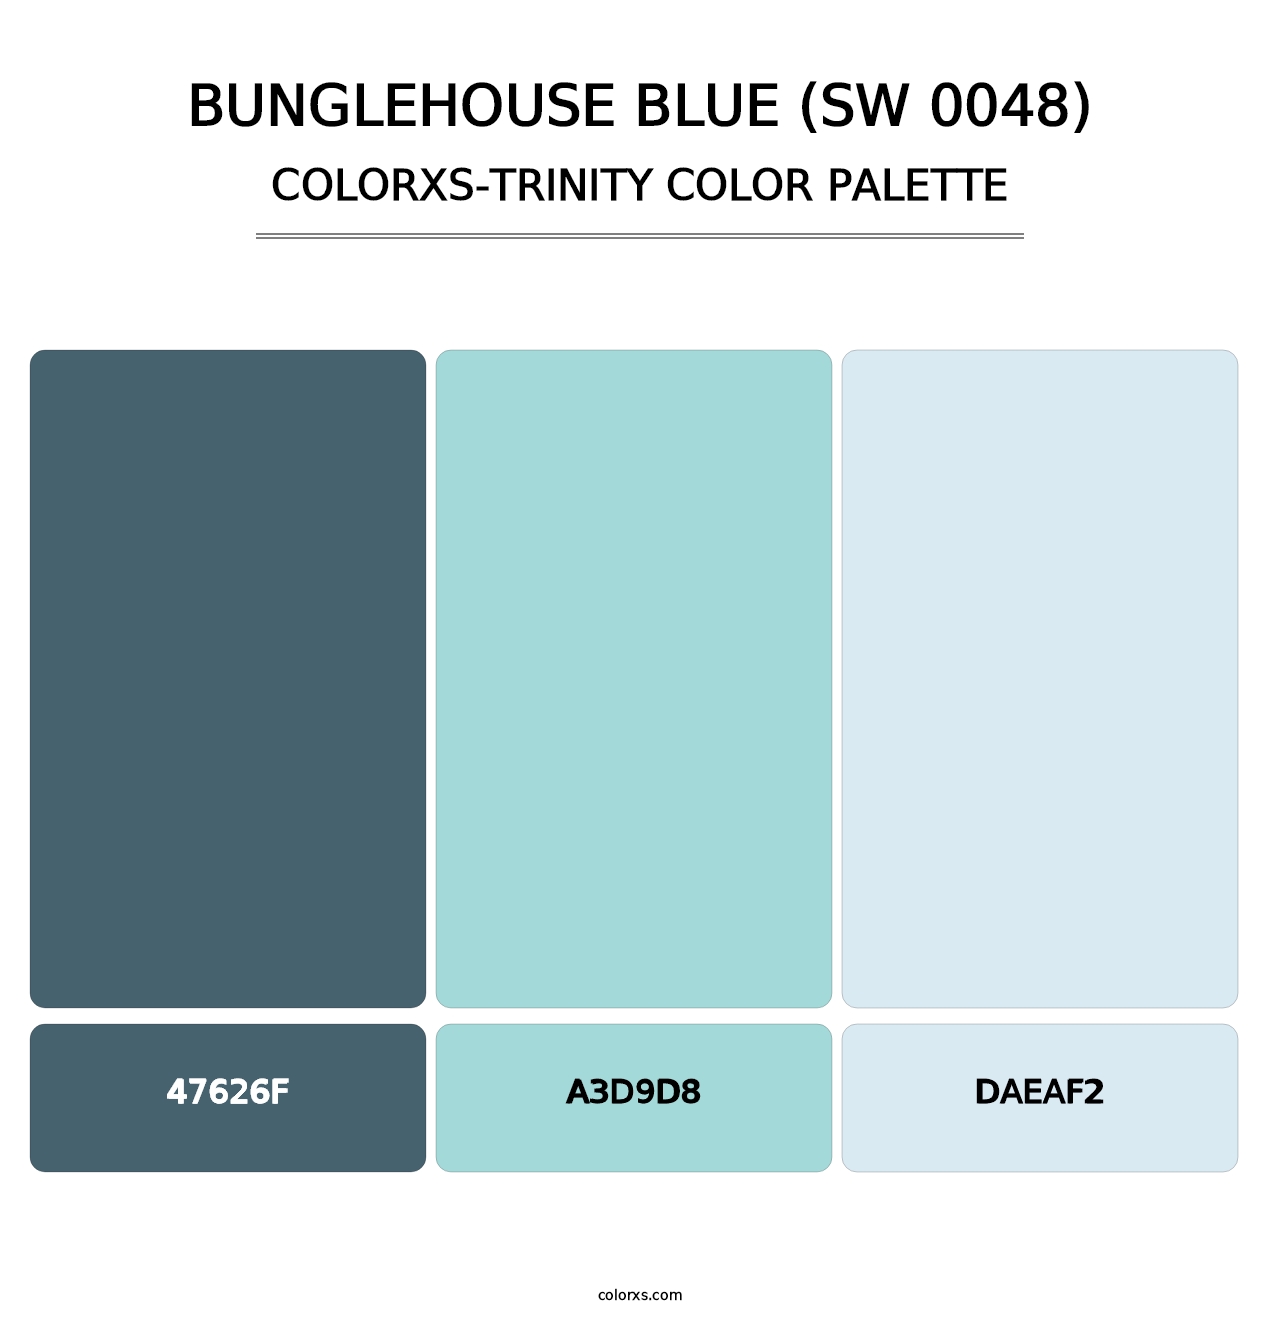 Bunglehouse Blue (SW 0048) - Colorxs Trinity Palette